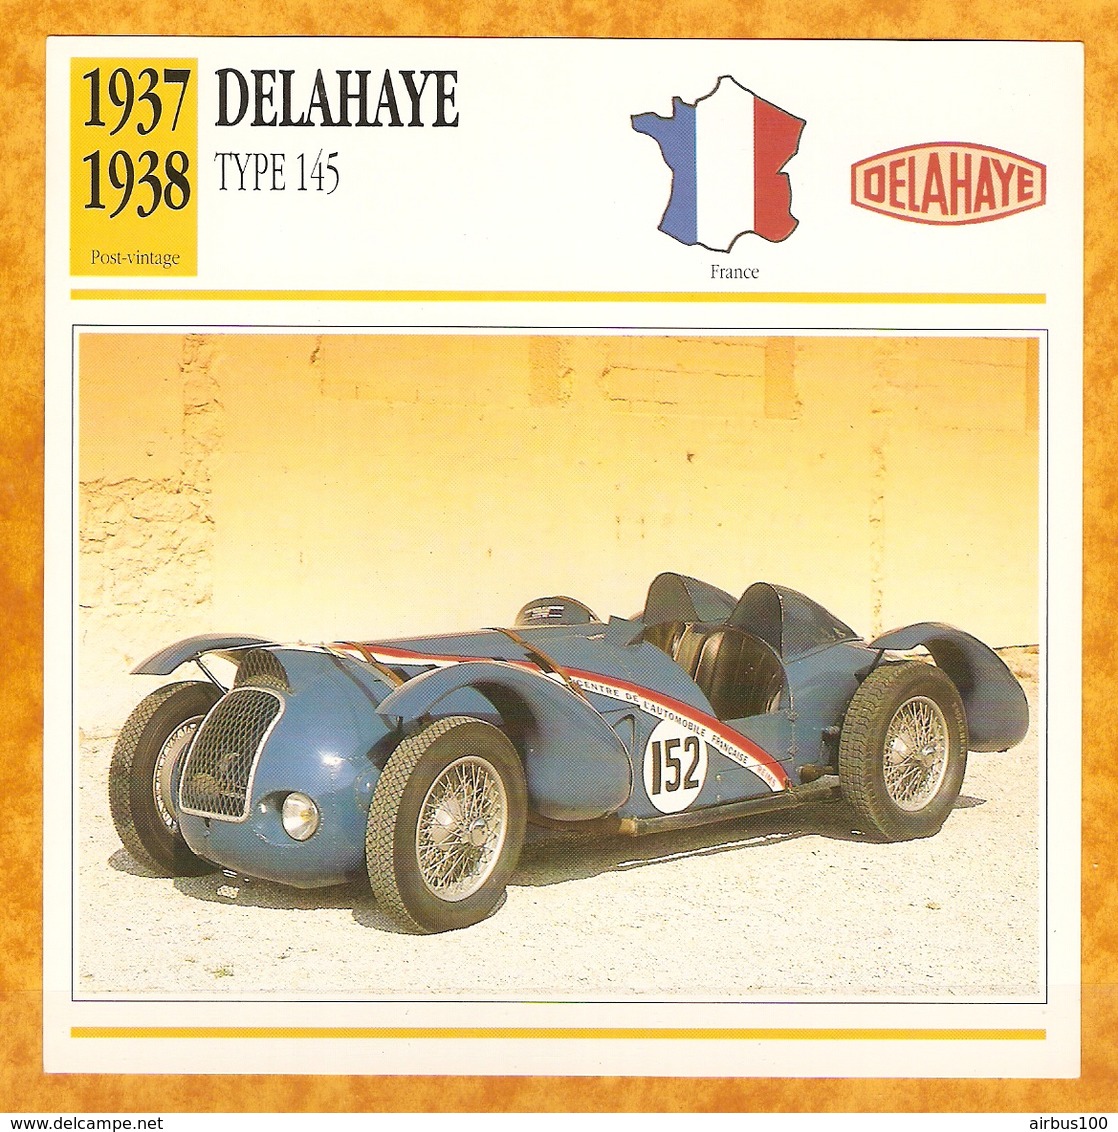 1937 FRANCE VIEILLE VOITURE DELAHAYE TYPE 145 - FRANCE OLD CAR - FRANCIA VIEJO COCHE - VECCHIA MACCHINA - Voitures